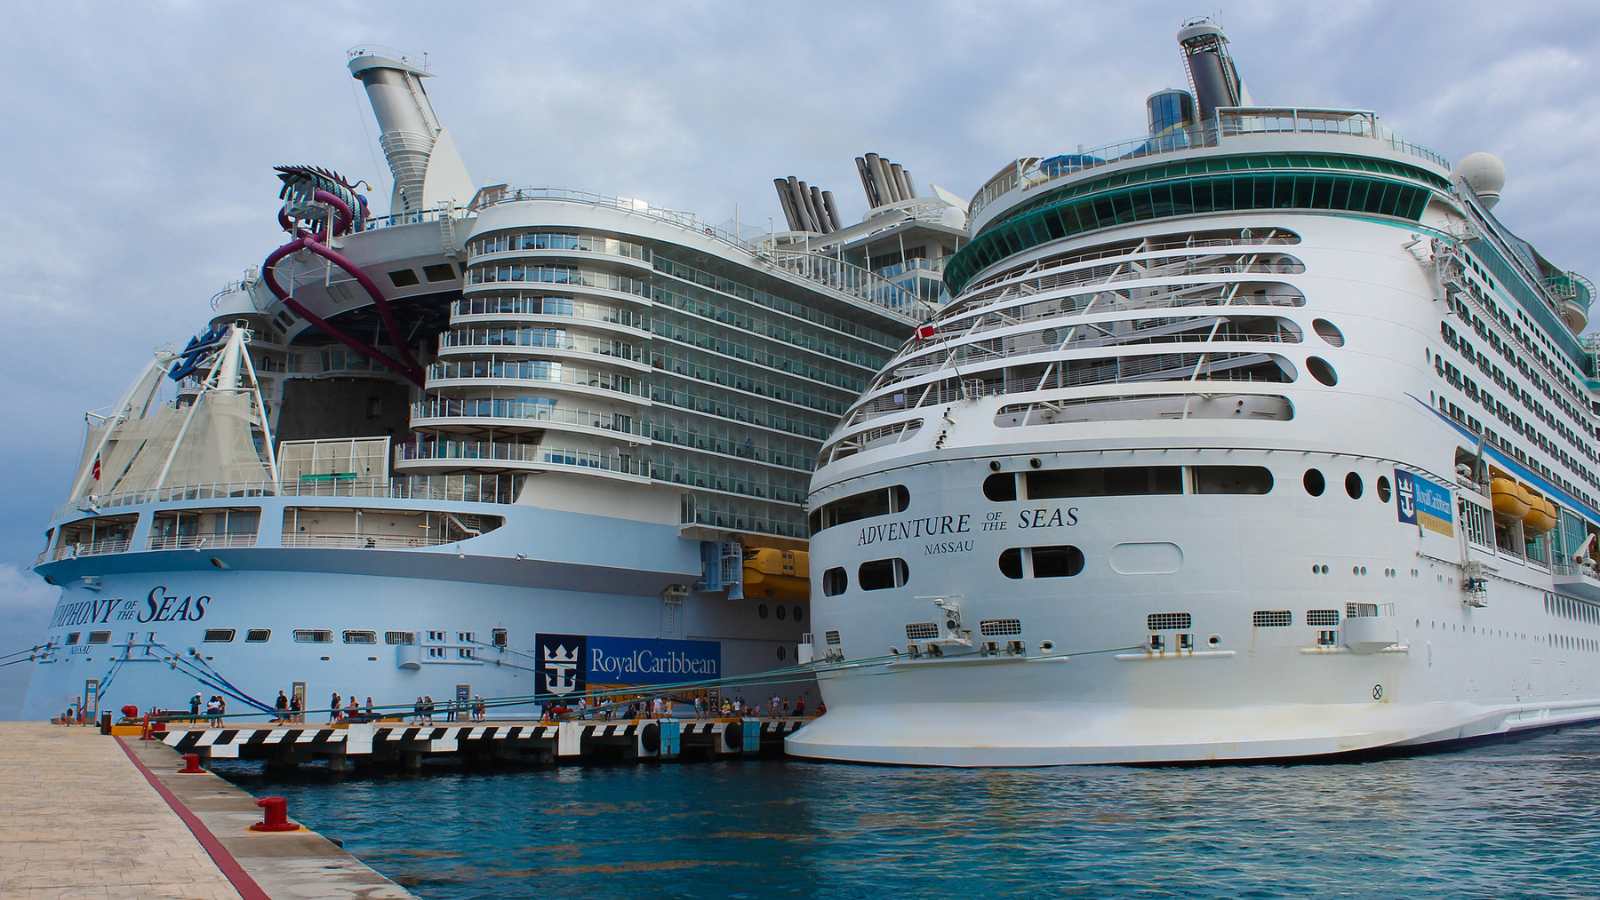 Royal Caribbean Cruise Ships - Royal Caribbean's Adventure of the Sea Cruise Ship